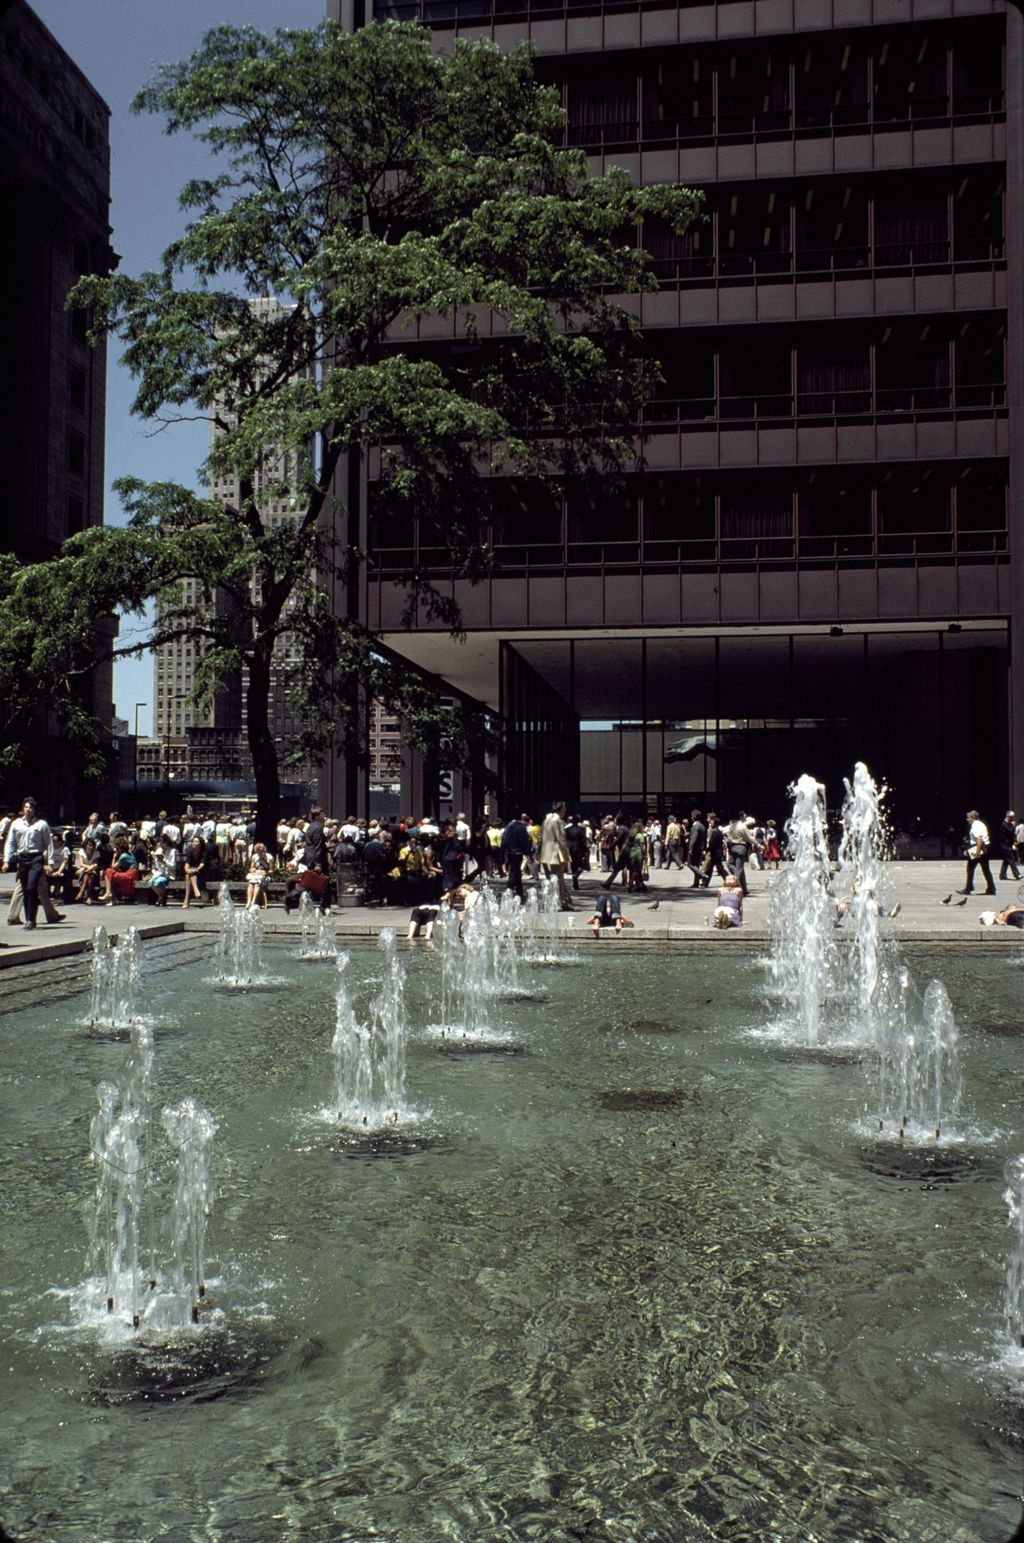 Richard J. Daley Center plaza